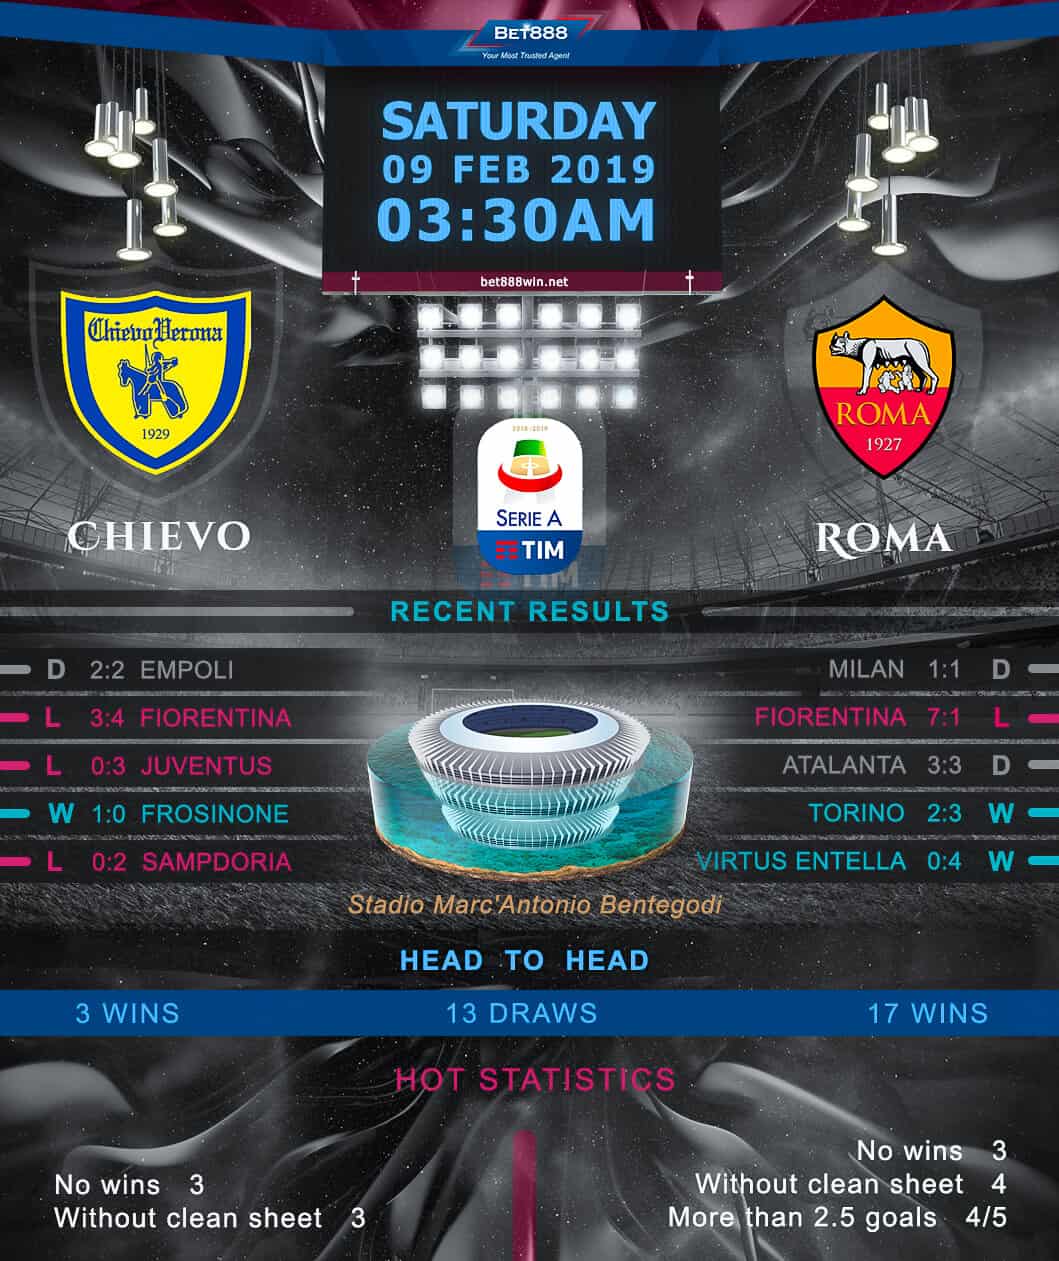 Chievo Verona vs AS Roma 09/02/19